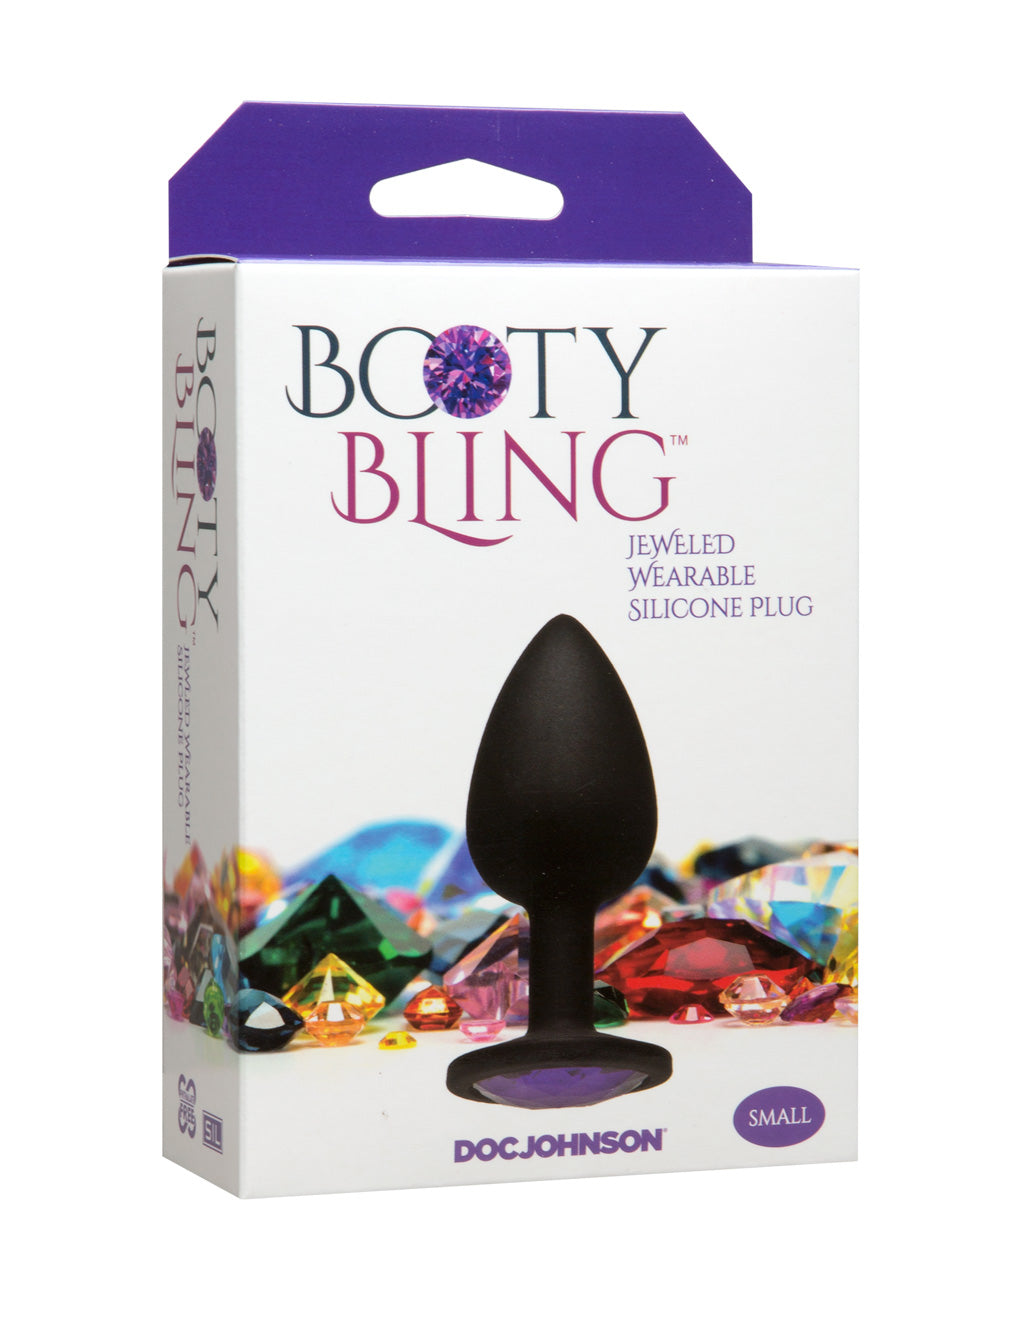 Booty Bling Plug S by Doc Johnson Purple Box 